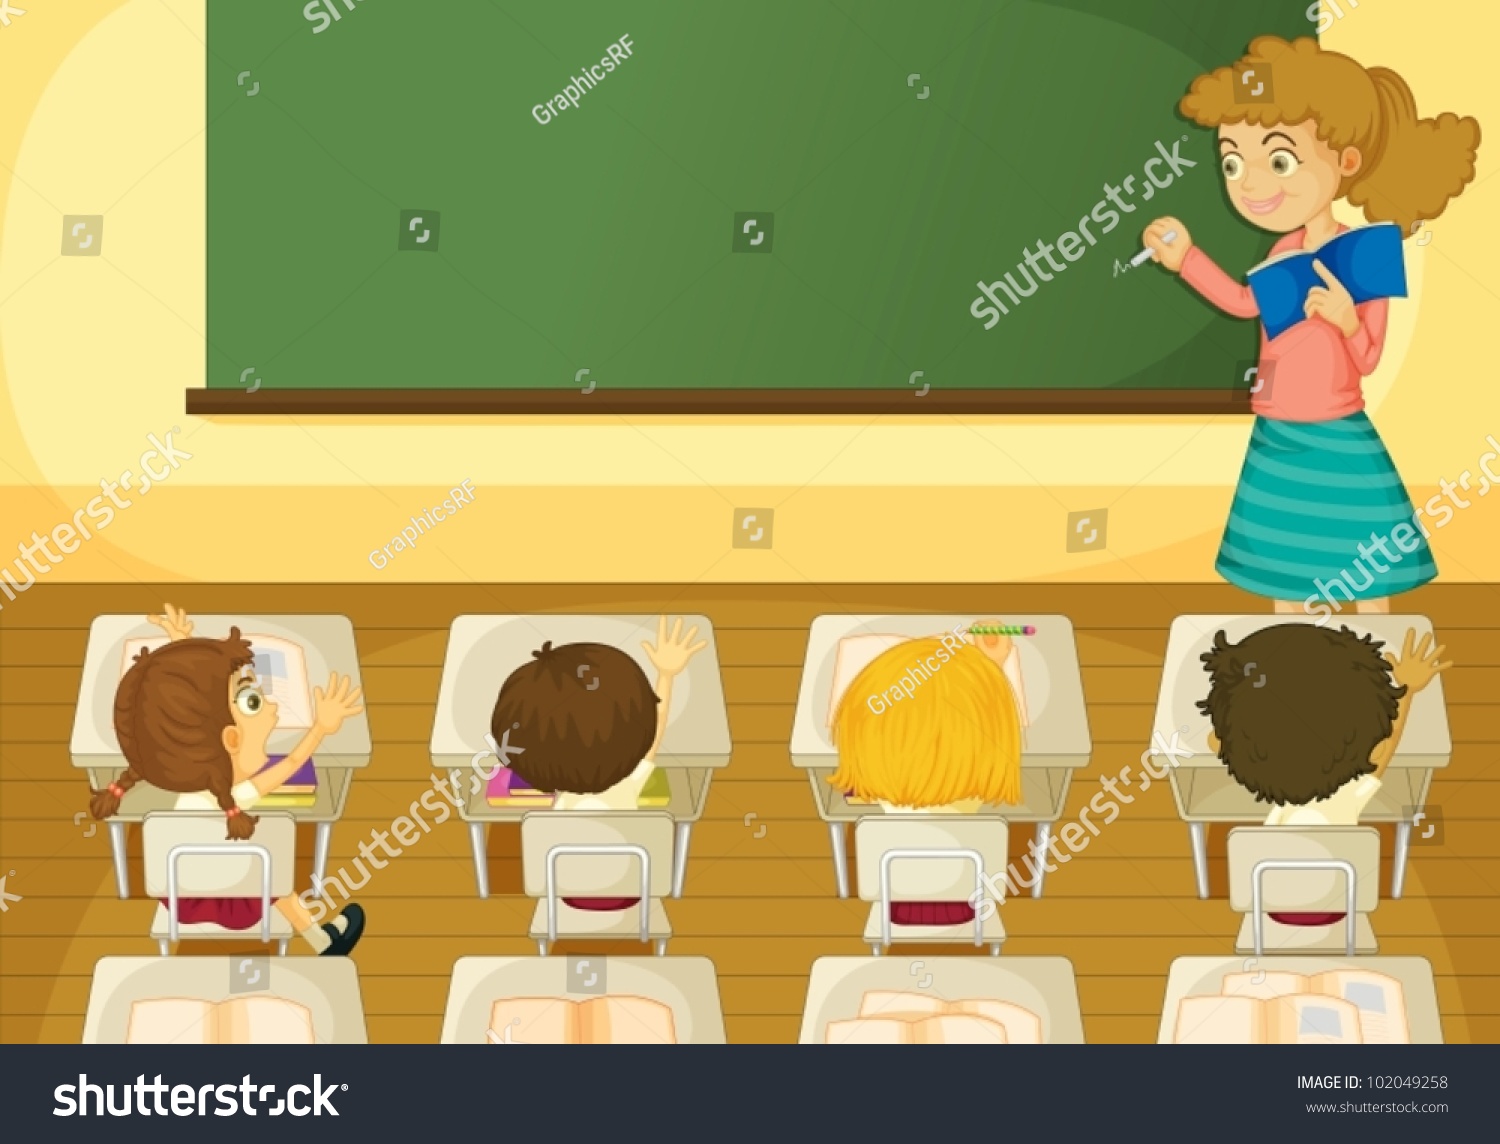 stock vector illustration of a classroom scene 102049258